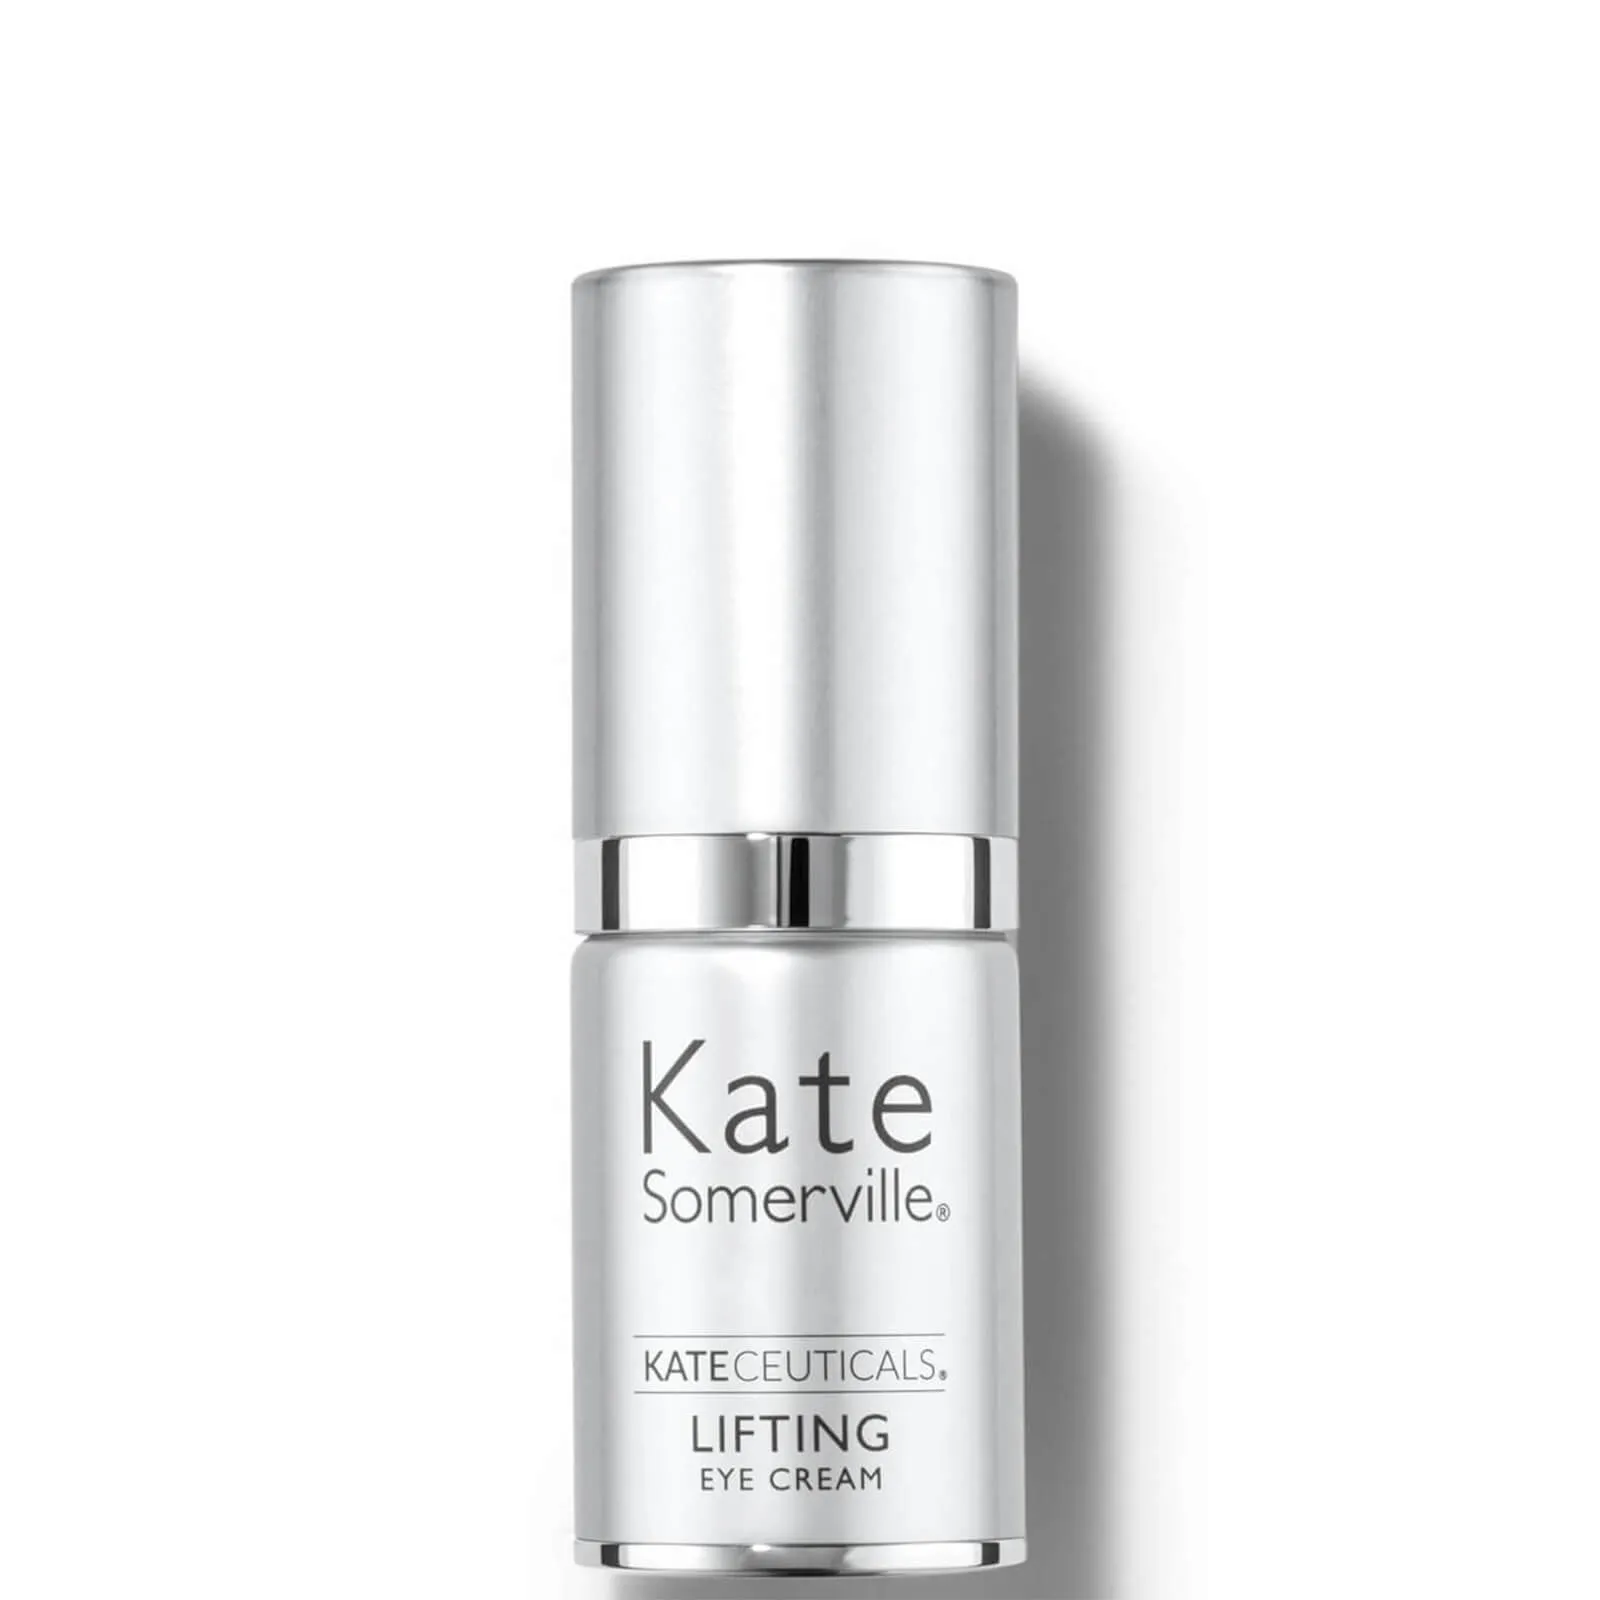  KateCeuticals Lifting Eye Cream 15ml